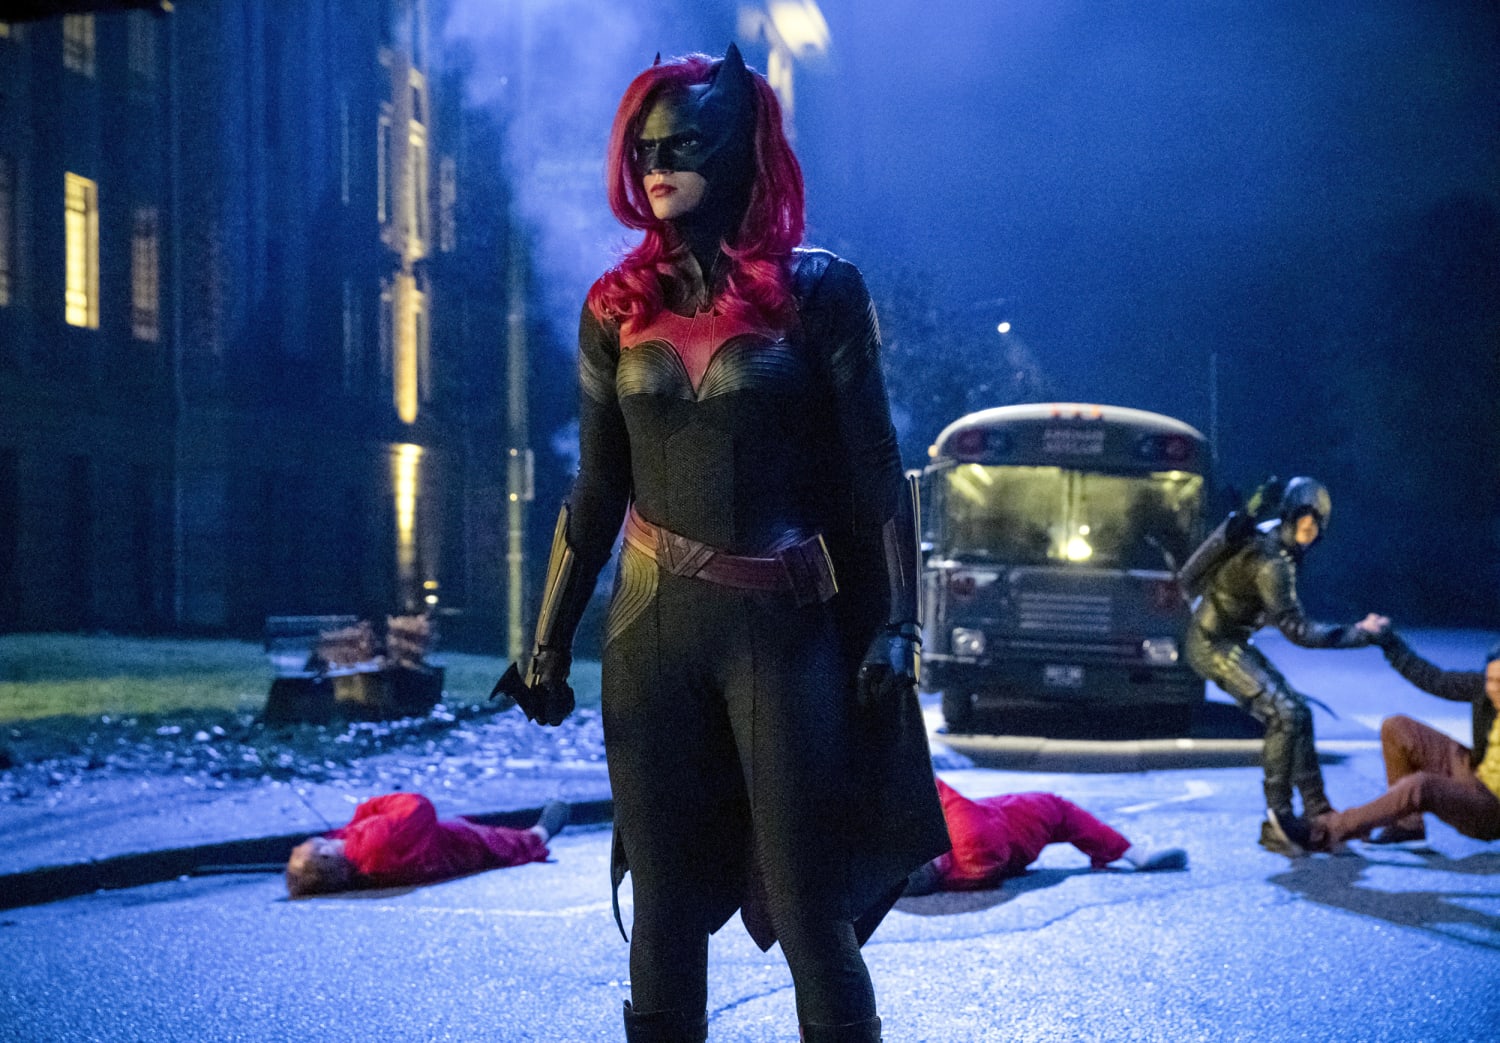 Batgirl Lesbian Free Nude Pics - Lesbian superhero series 'Batwoman' coming to The CW